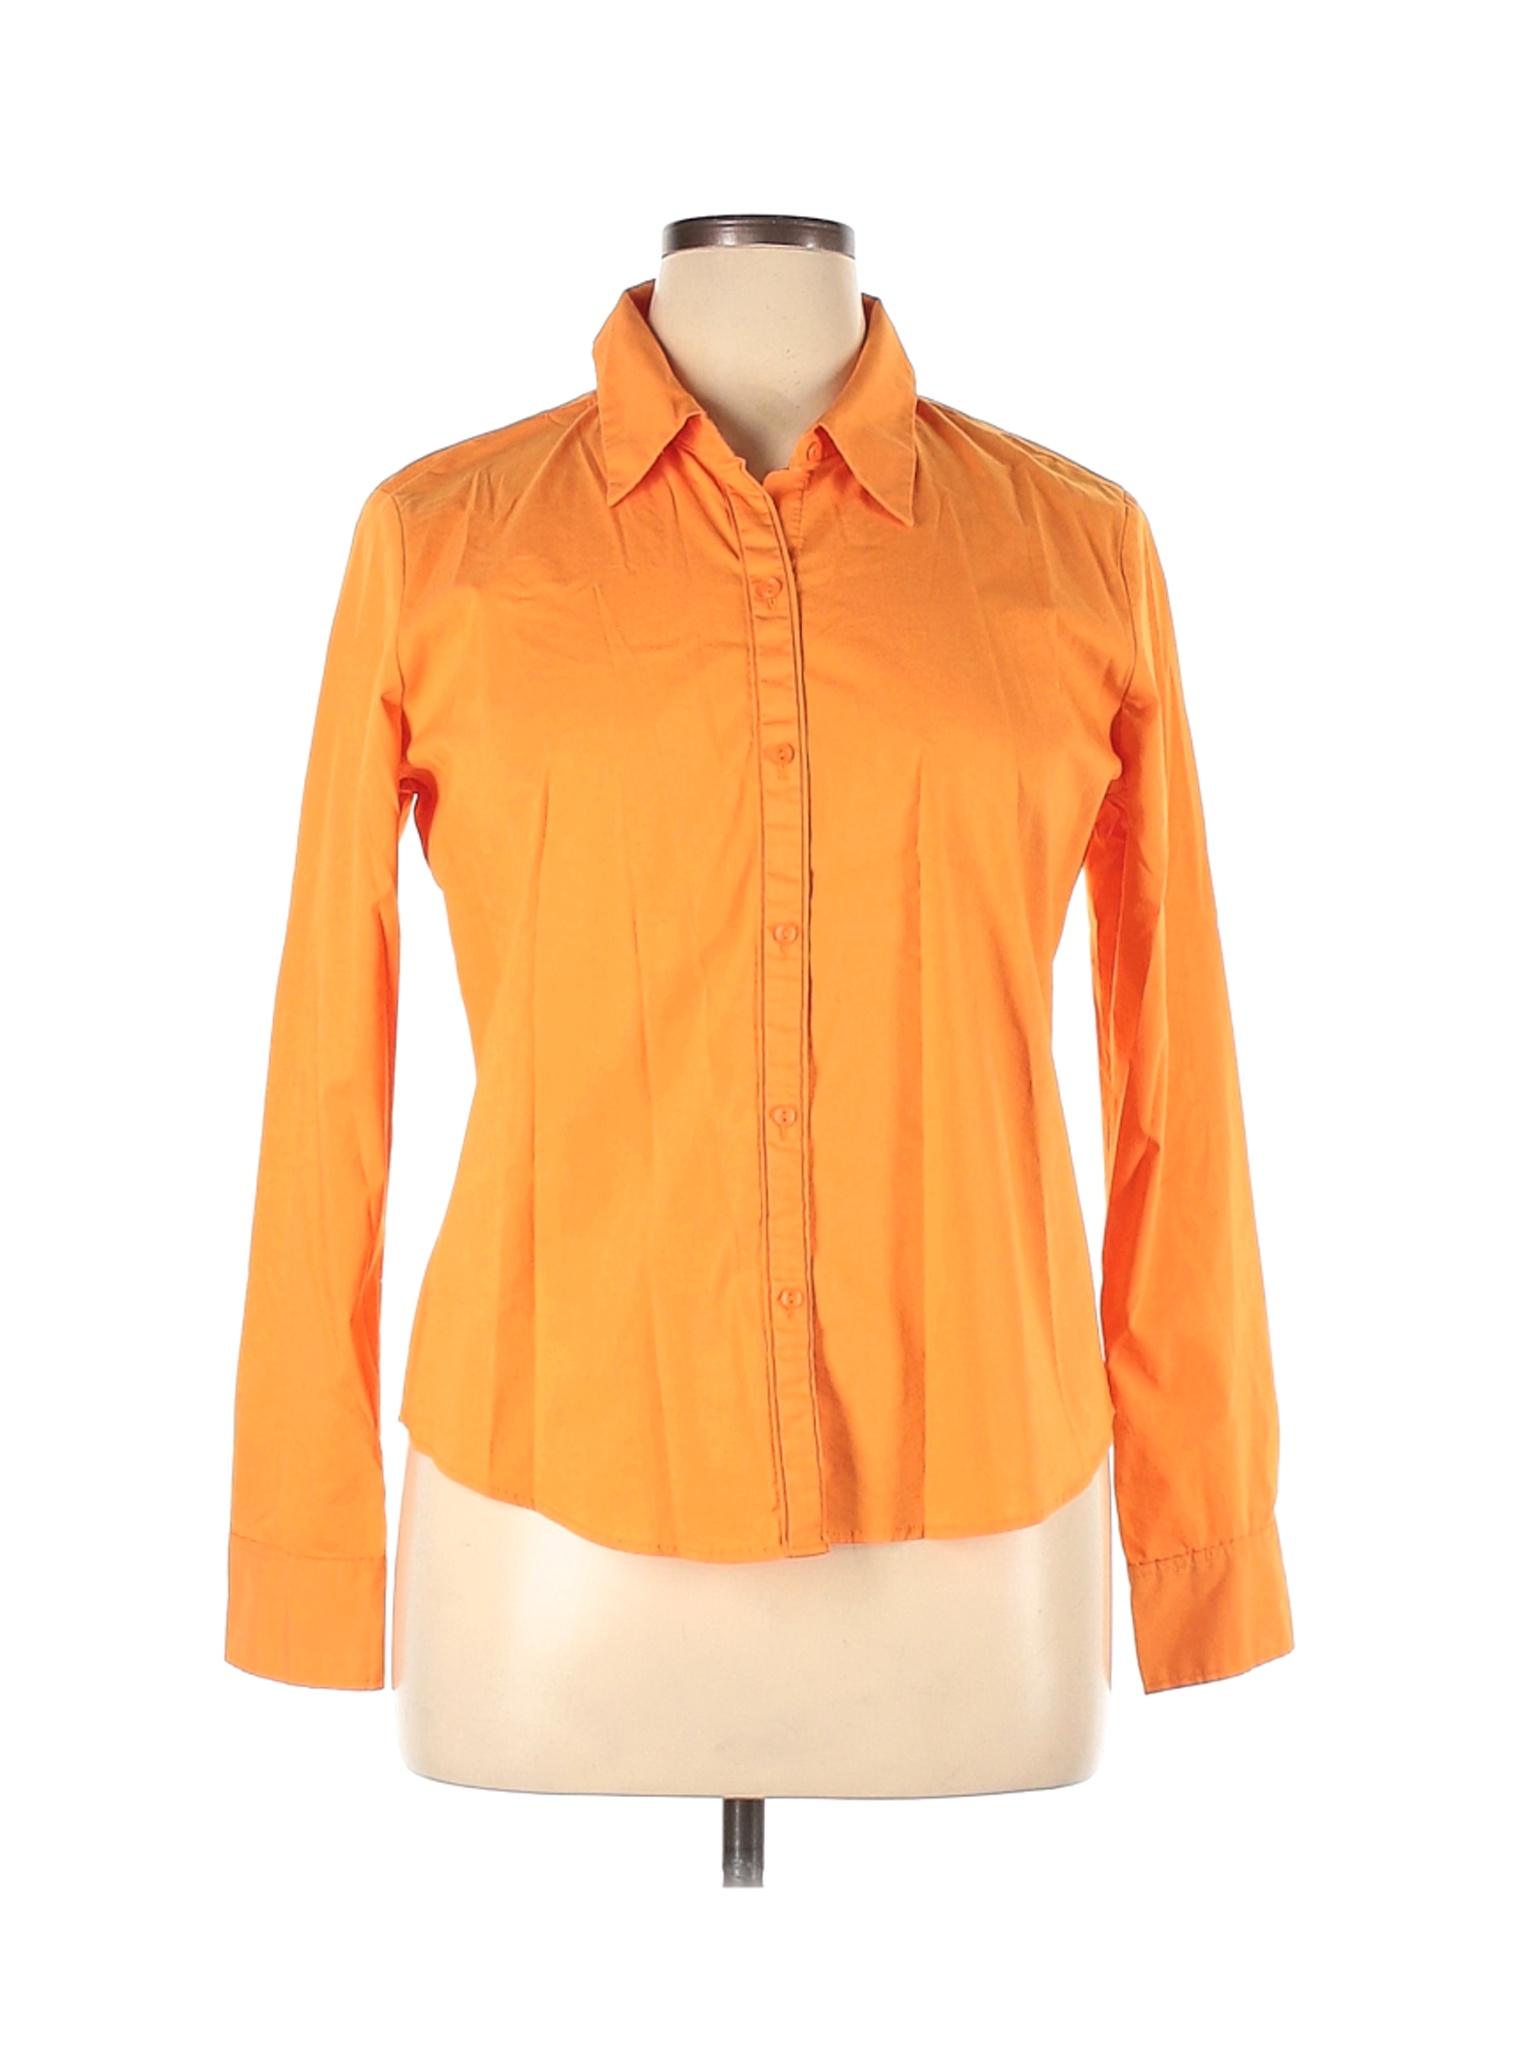 Liz Claiborne Women Yellow Long Sleeve Button-Down Shirt XL | eBay